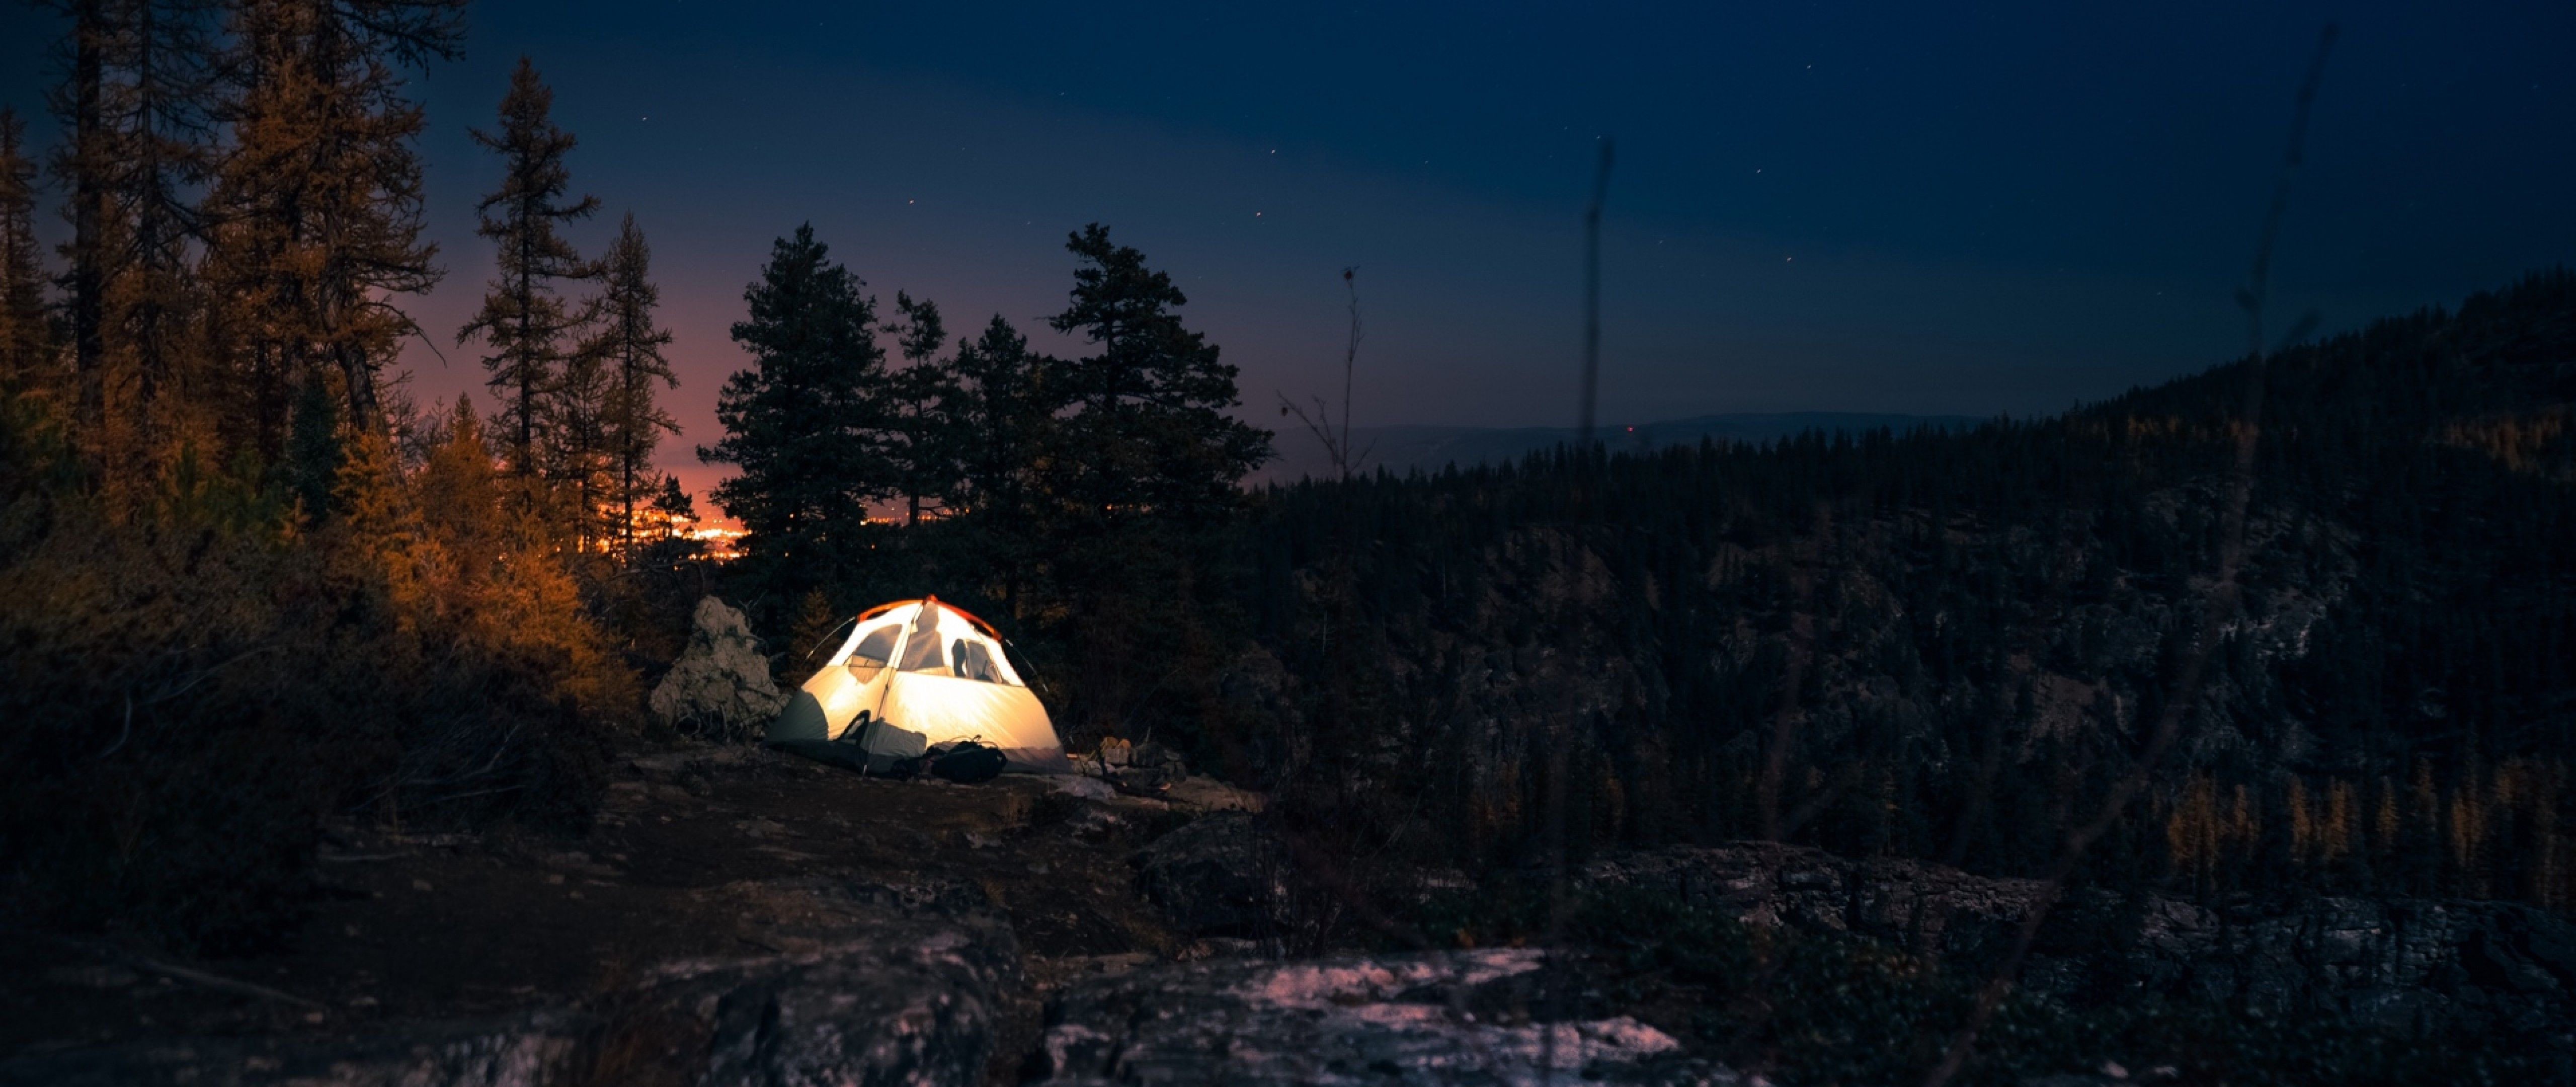 Night Camping 4k Wallpaper .teahub.io